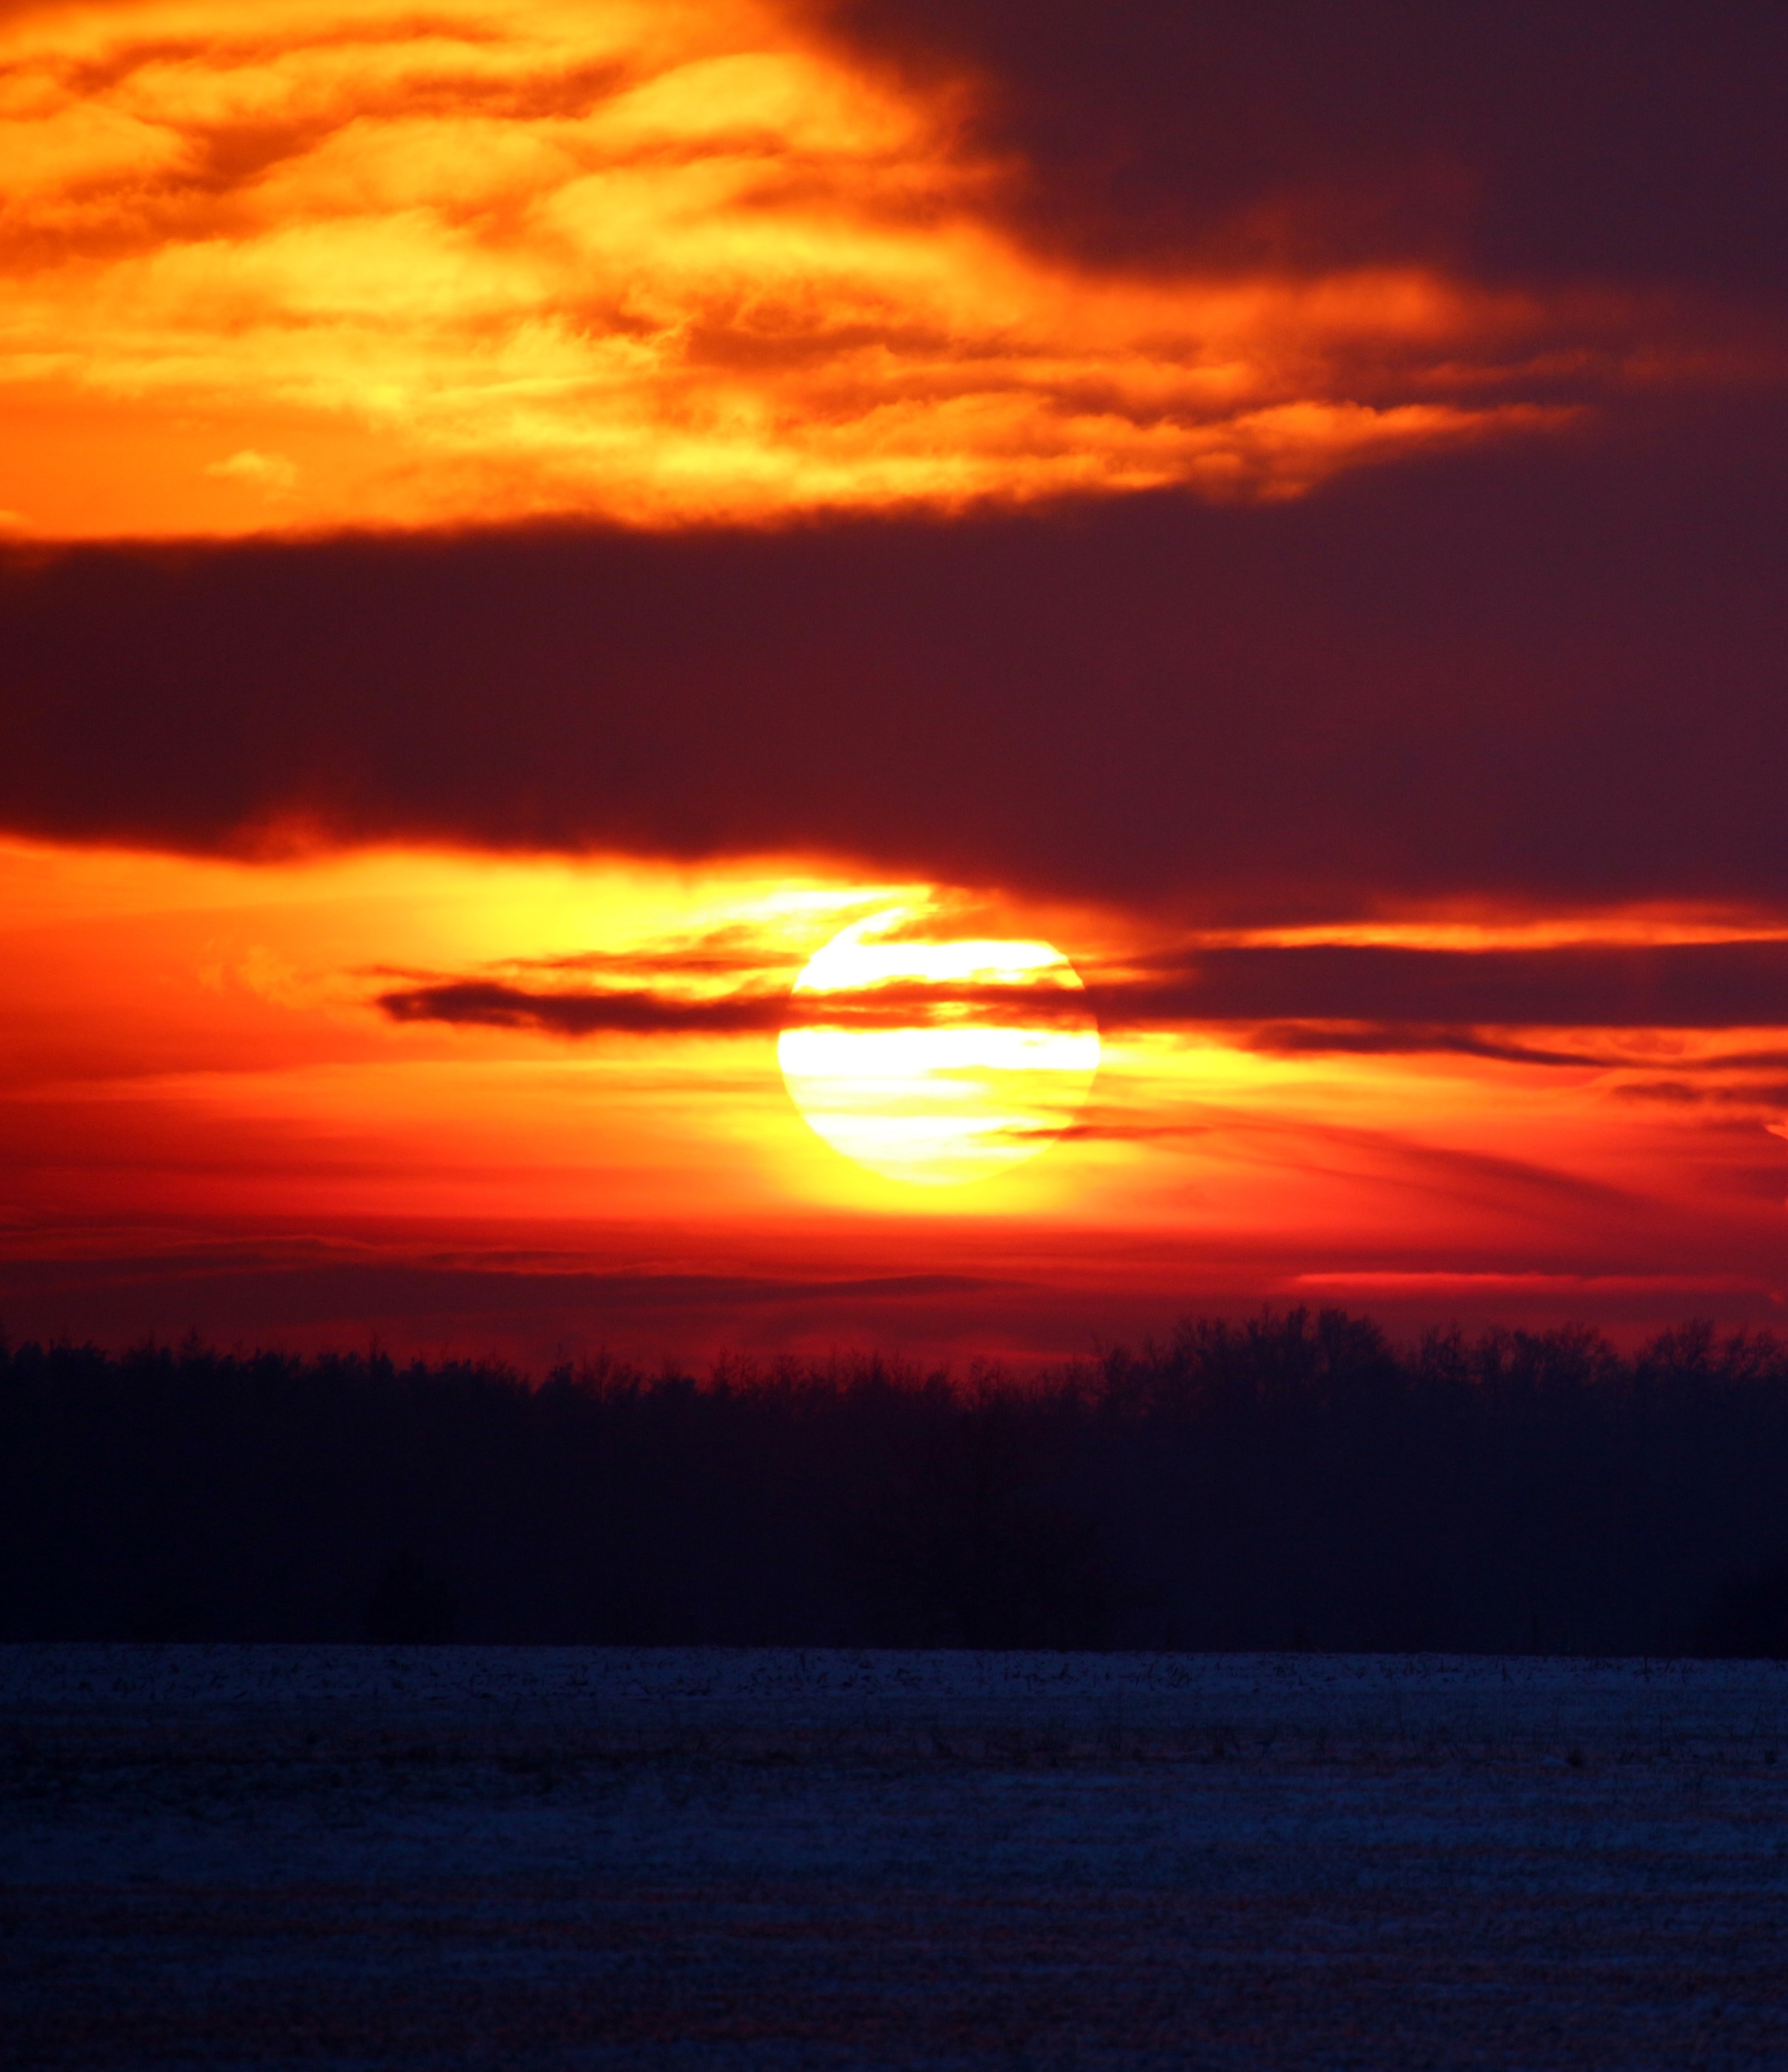 Snow, Wintry, Sunset, Afterglow, Sun, sunset, orange color